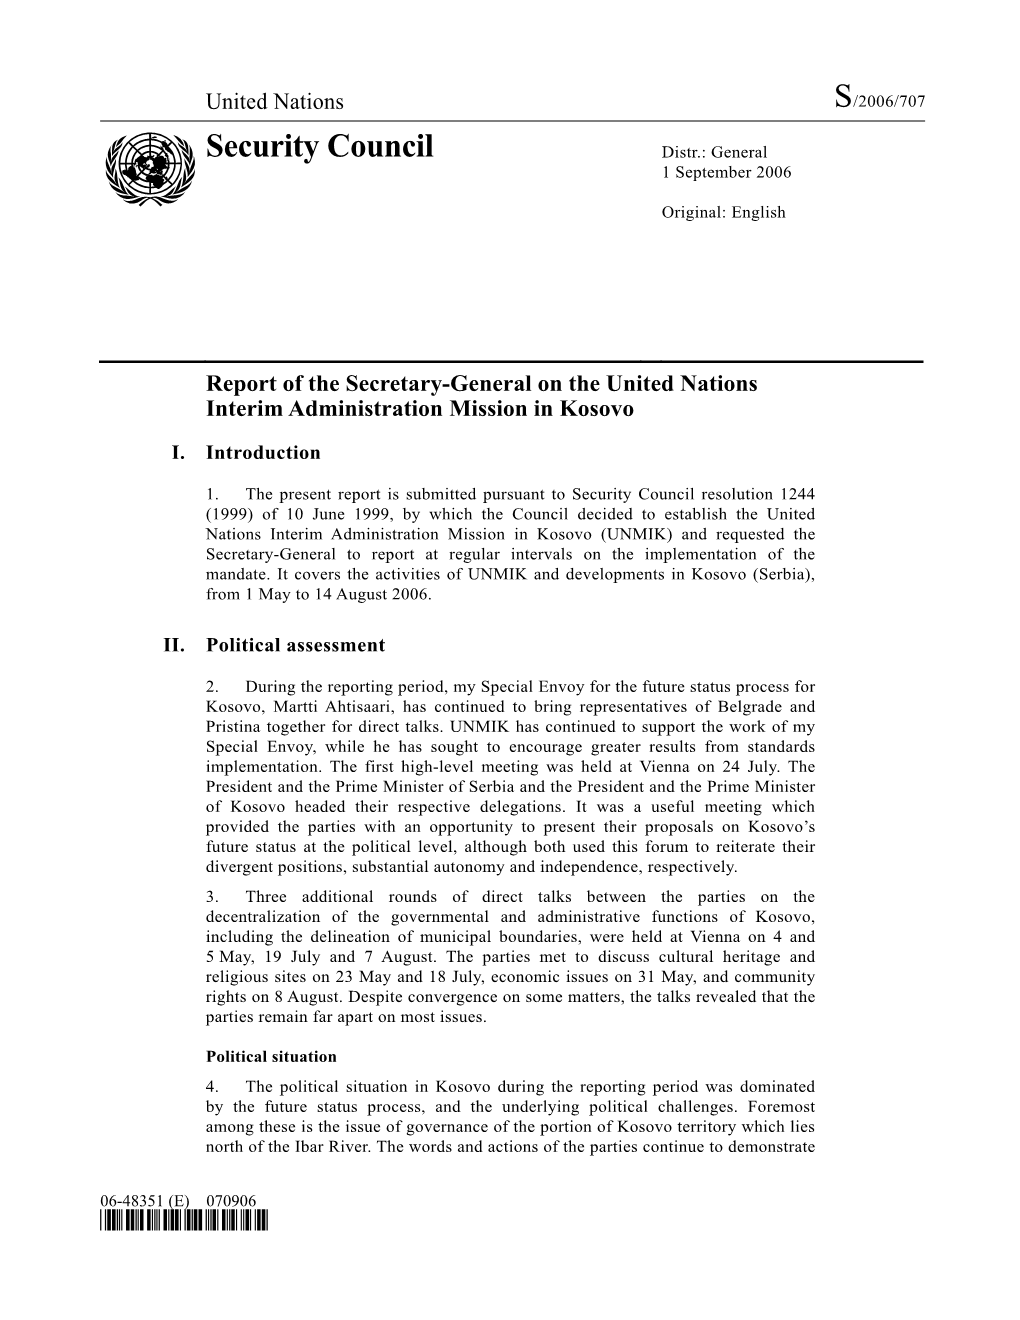 Security Council Distr.: General 1 September 2006